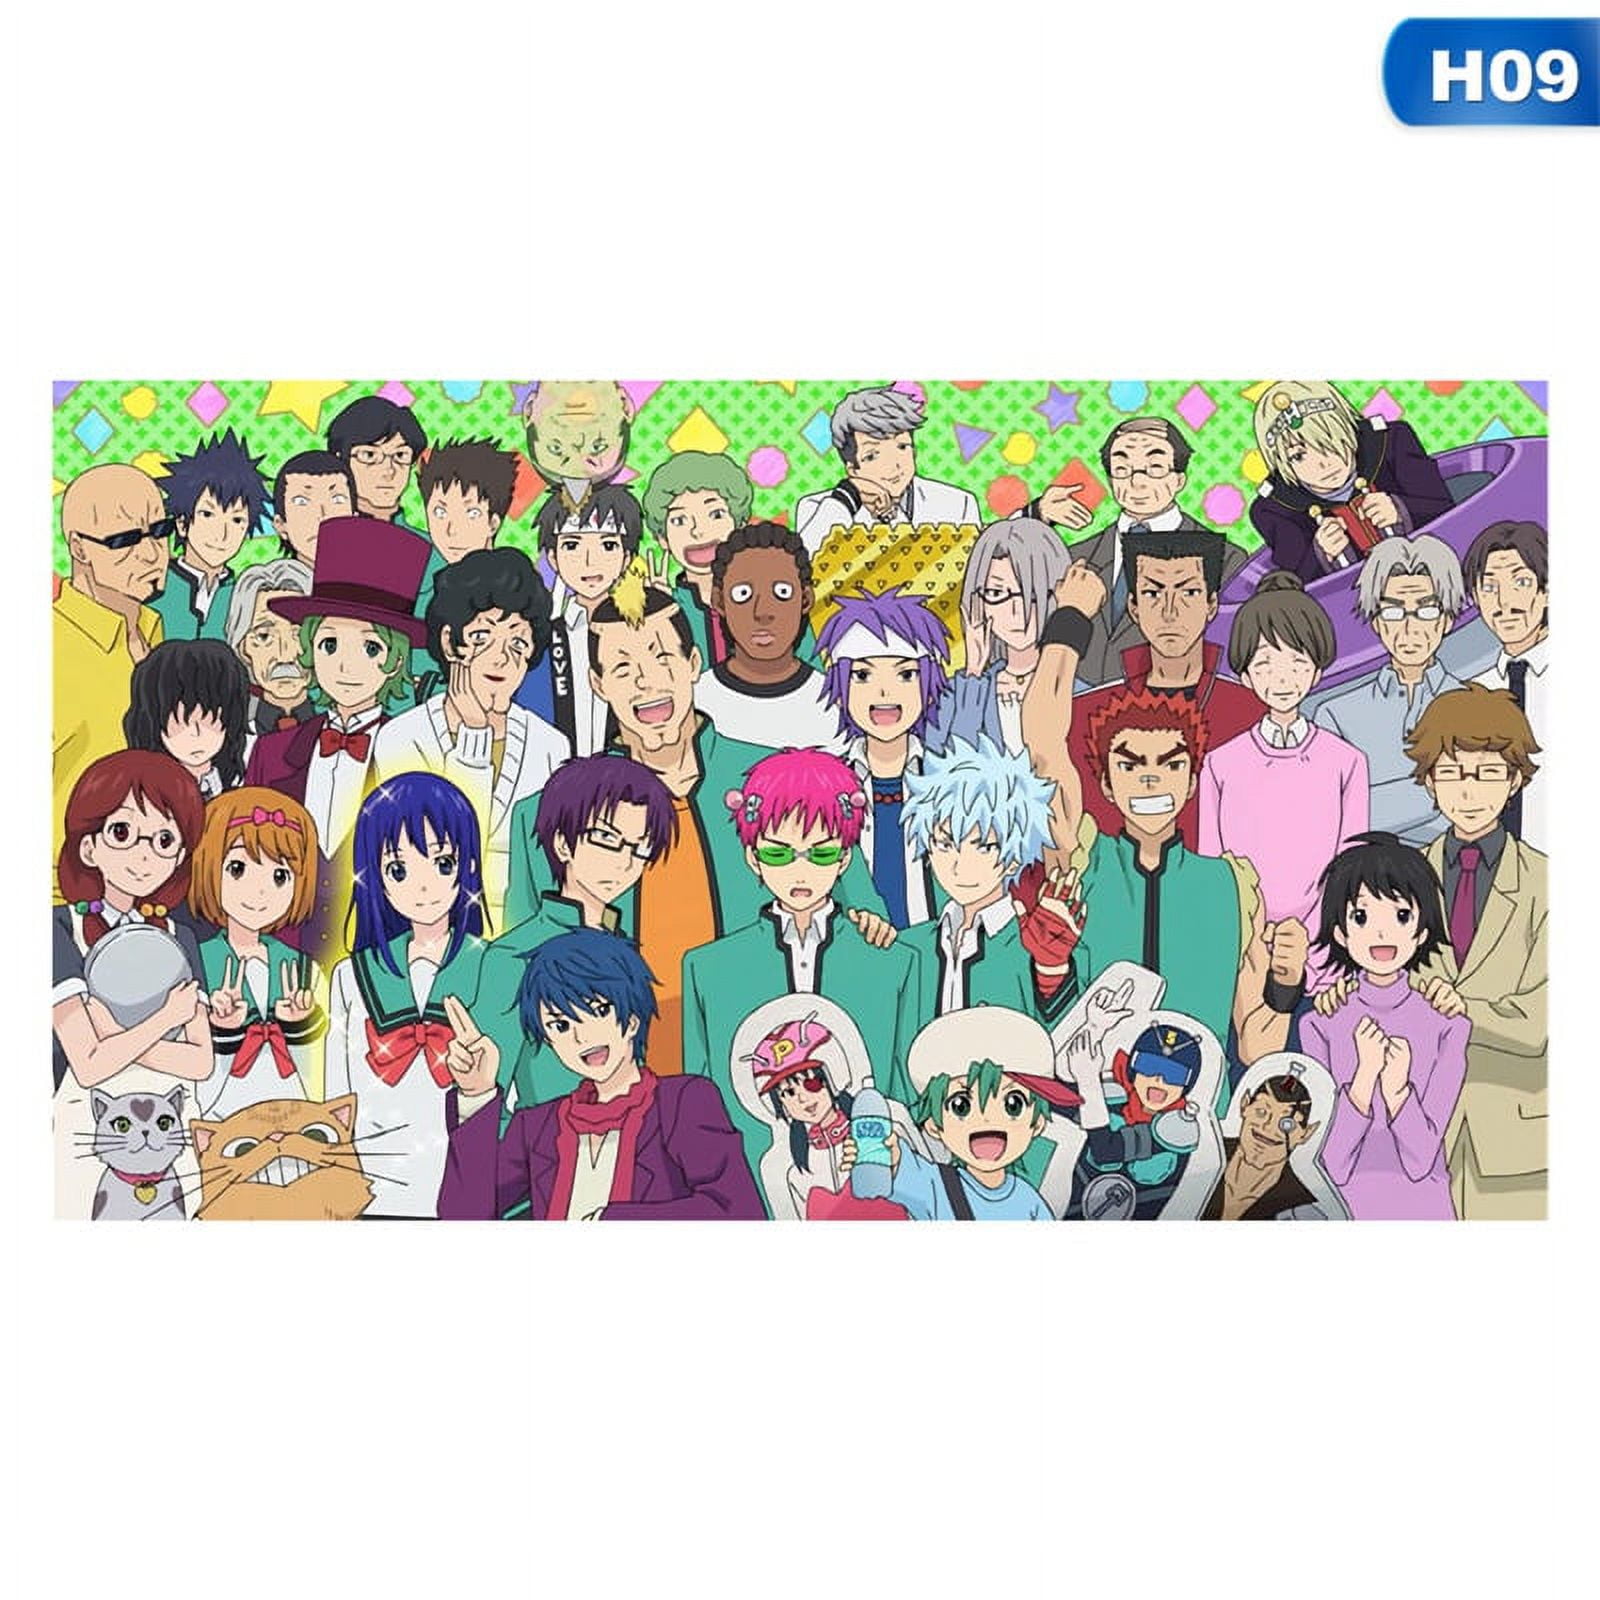 The Disastrous Life of Saiki K' Final Anime Reveals New Poster